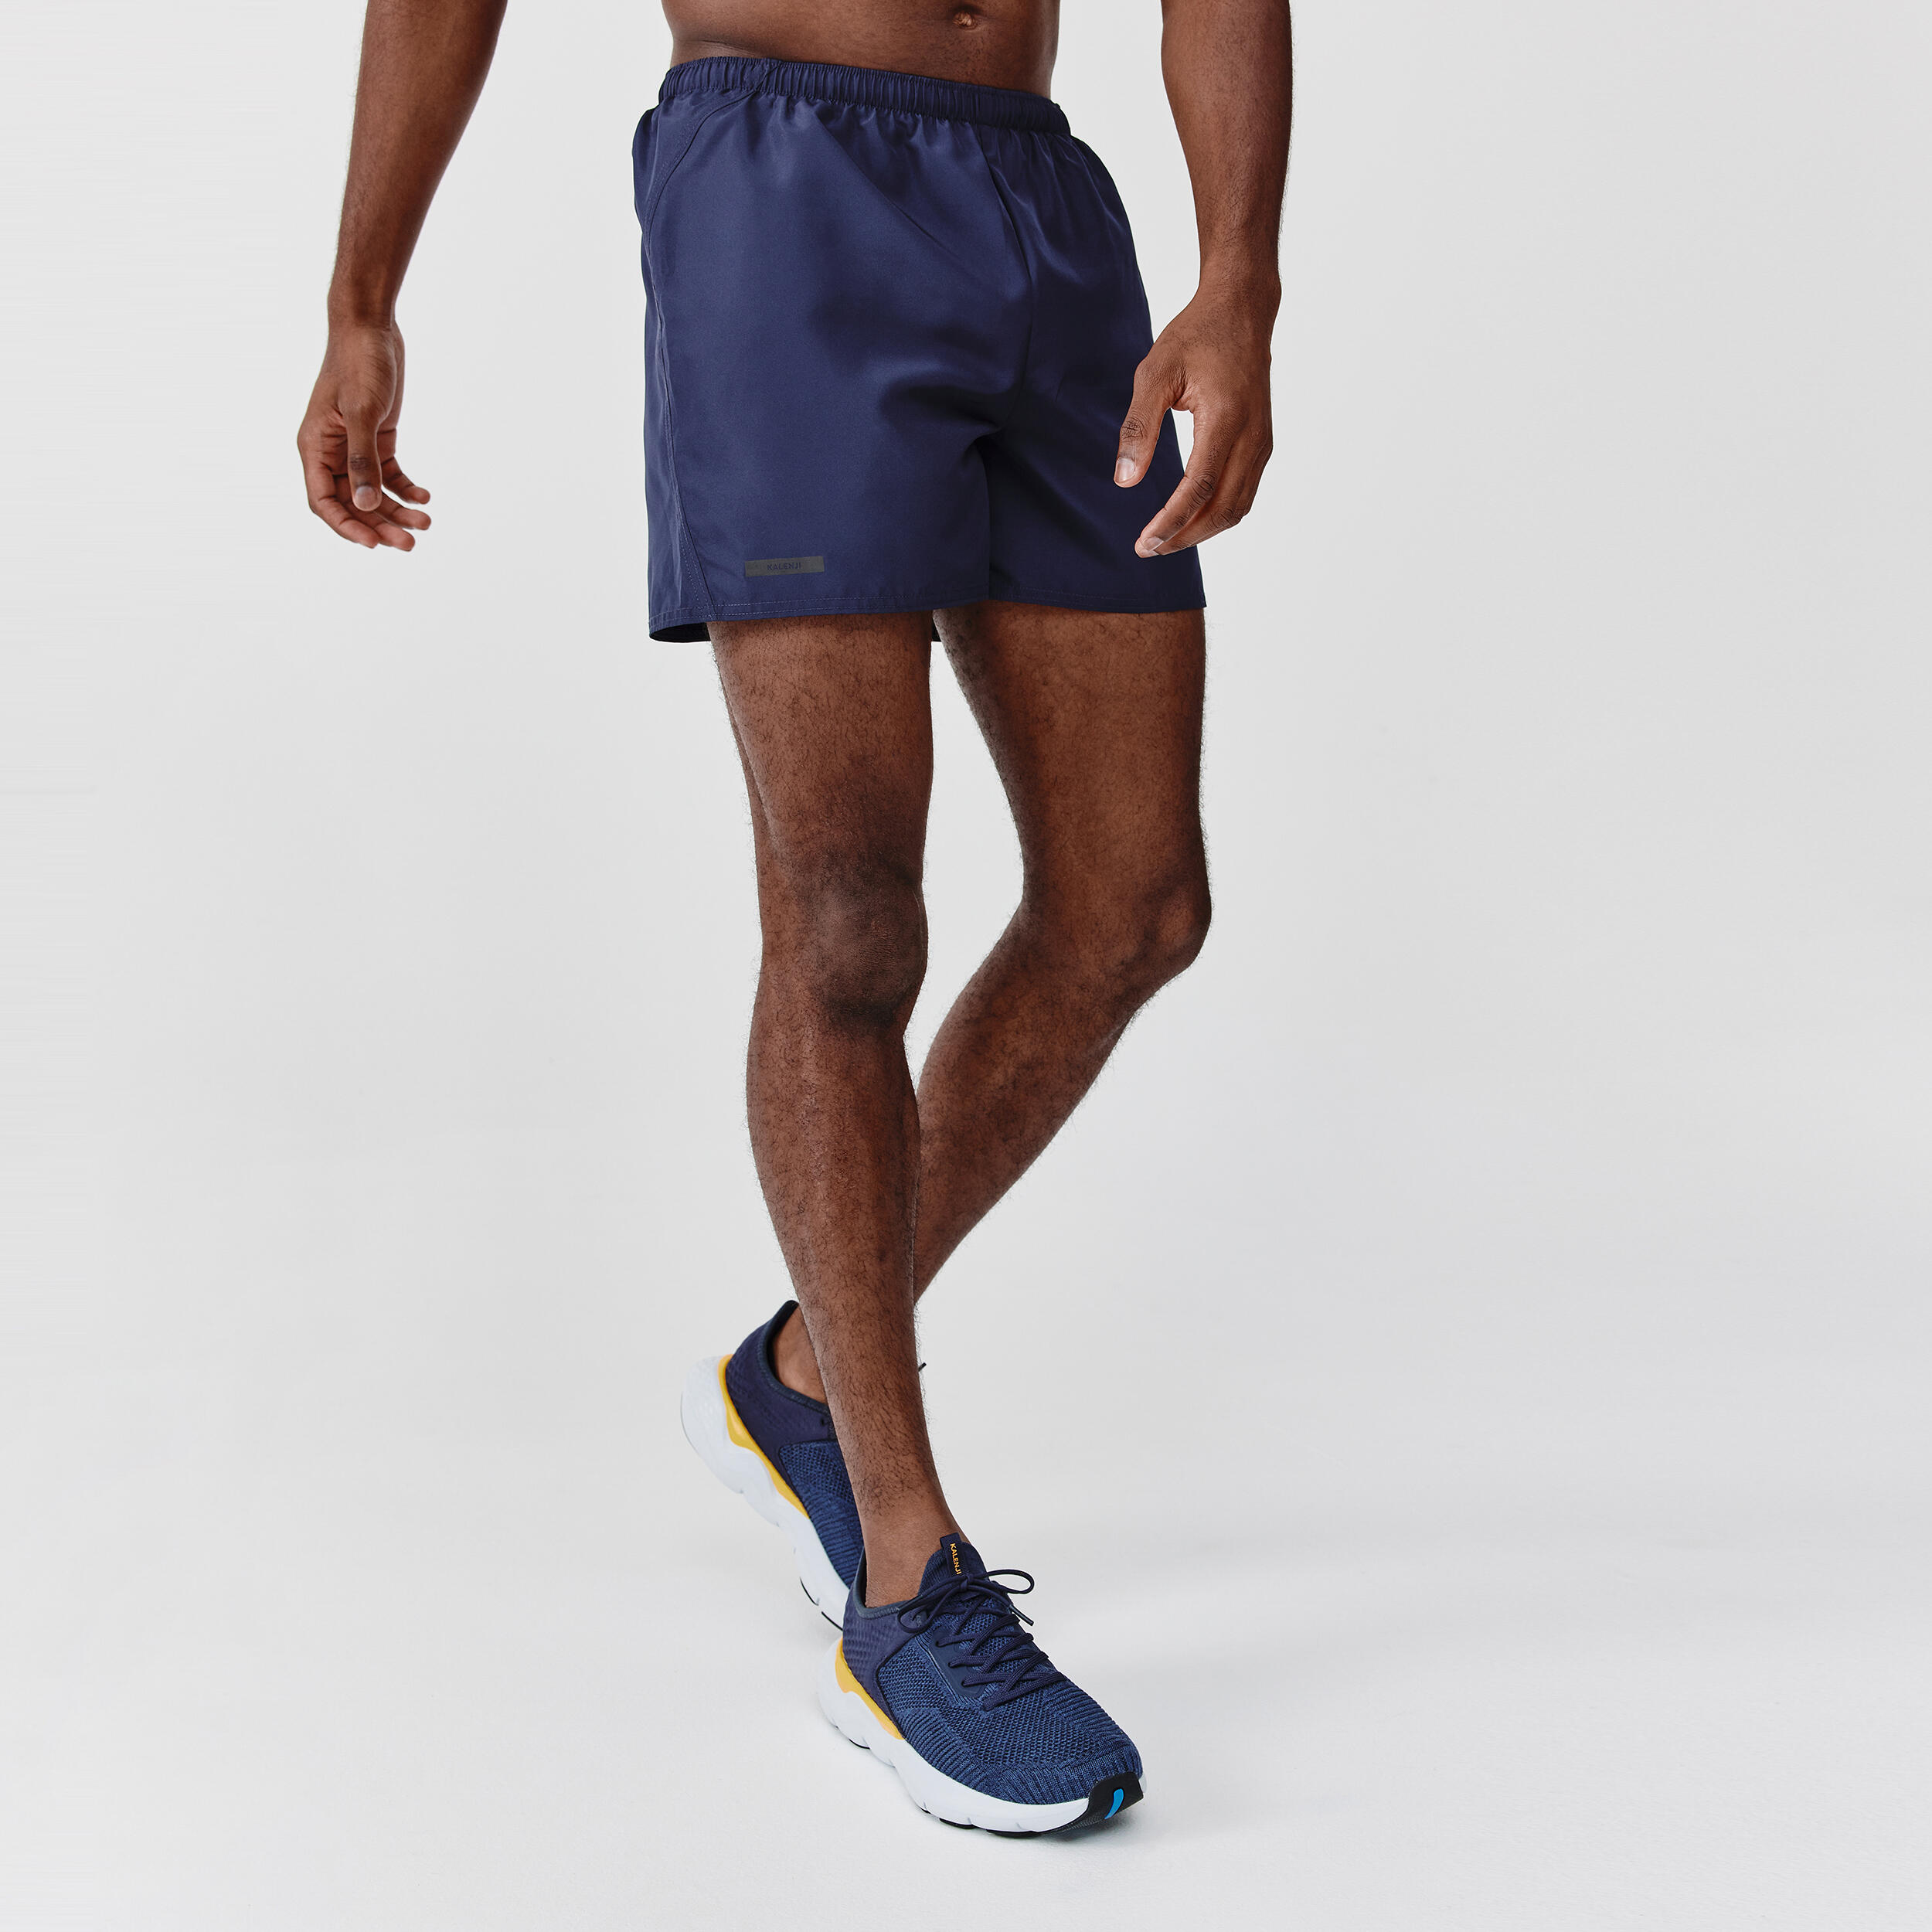 Men's Breathable Briefs - Dark blue - Dark blue - Kalenji - Decathlon